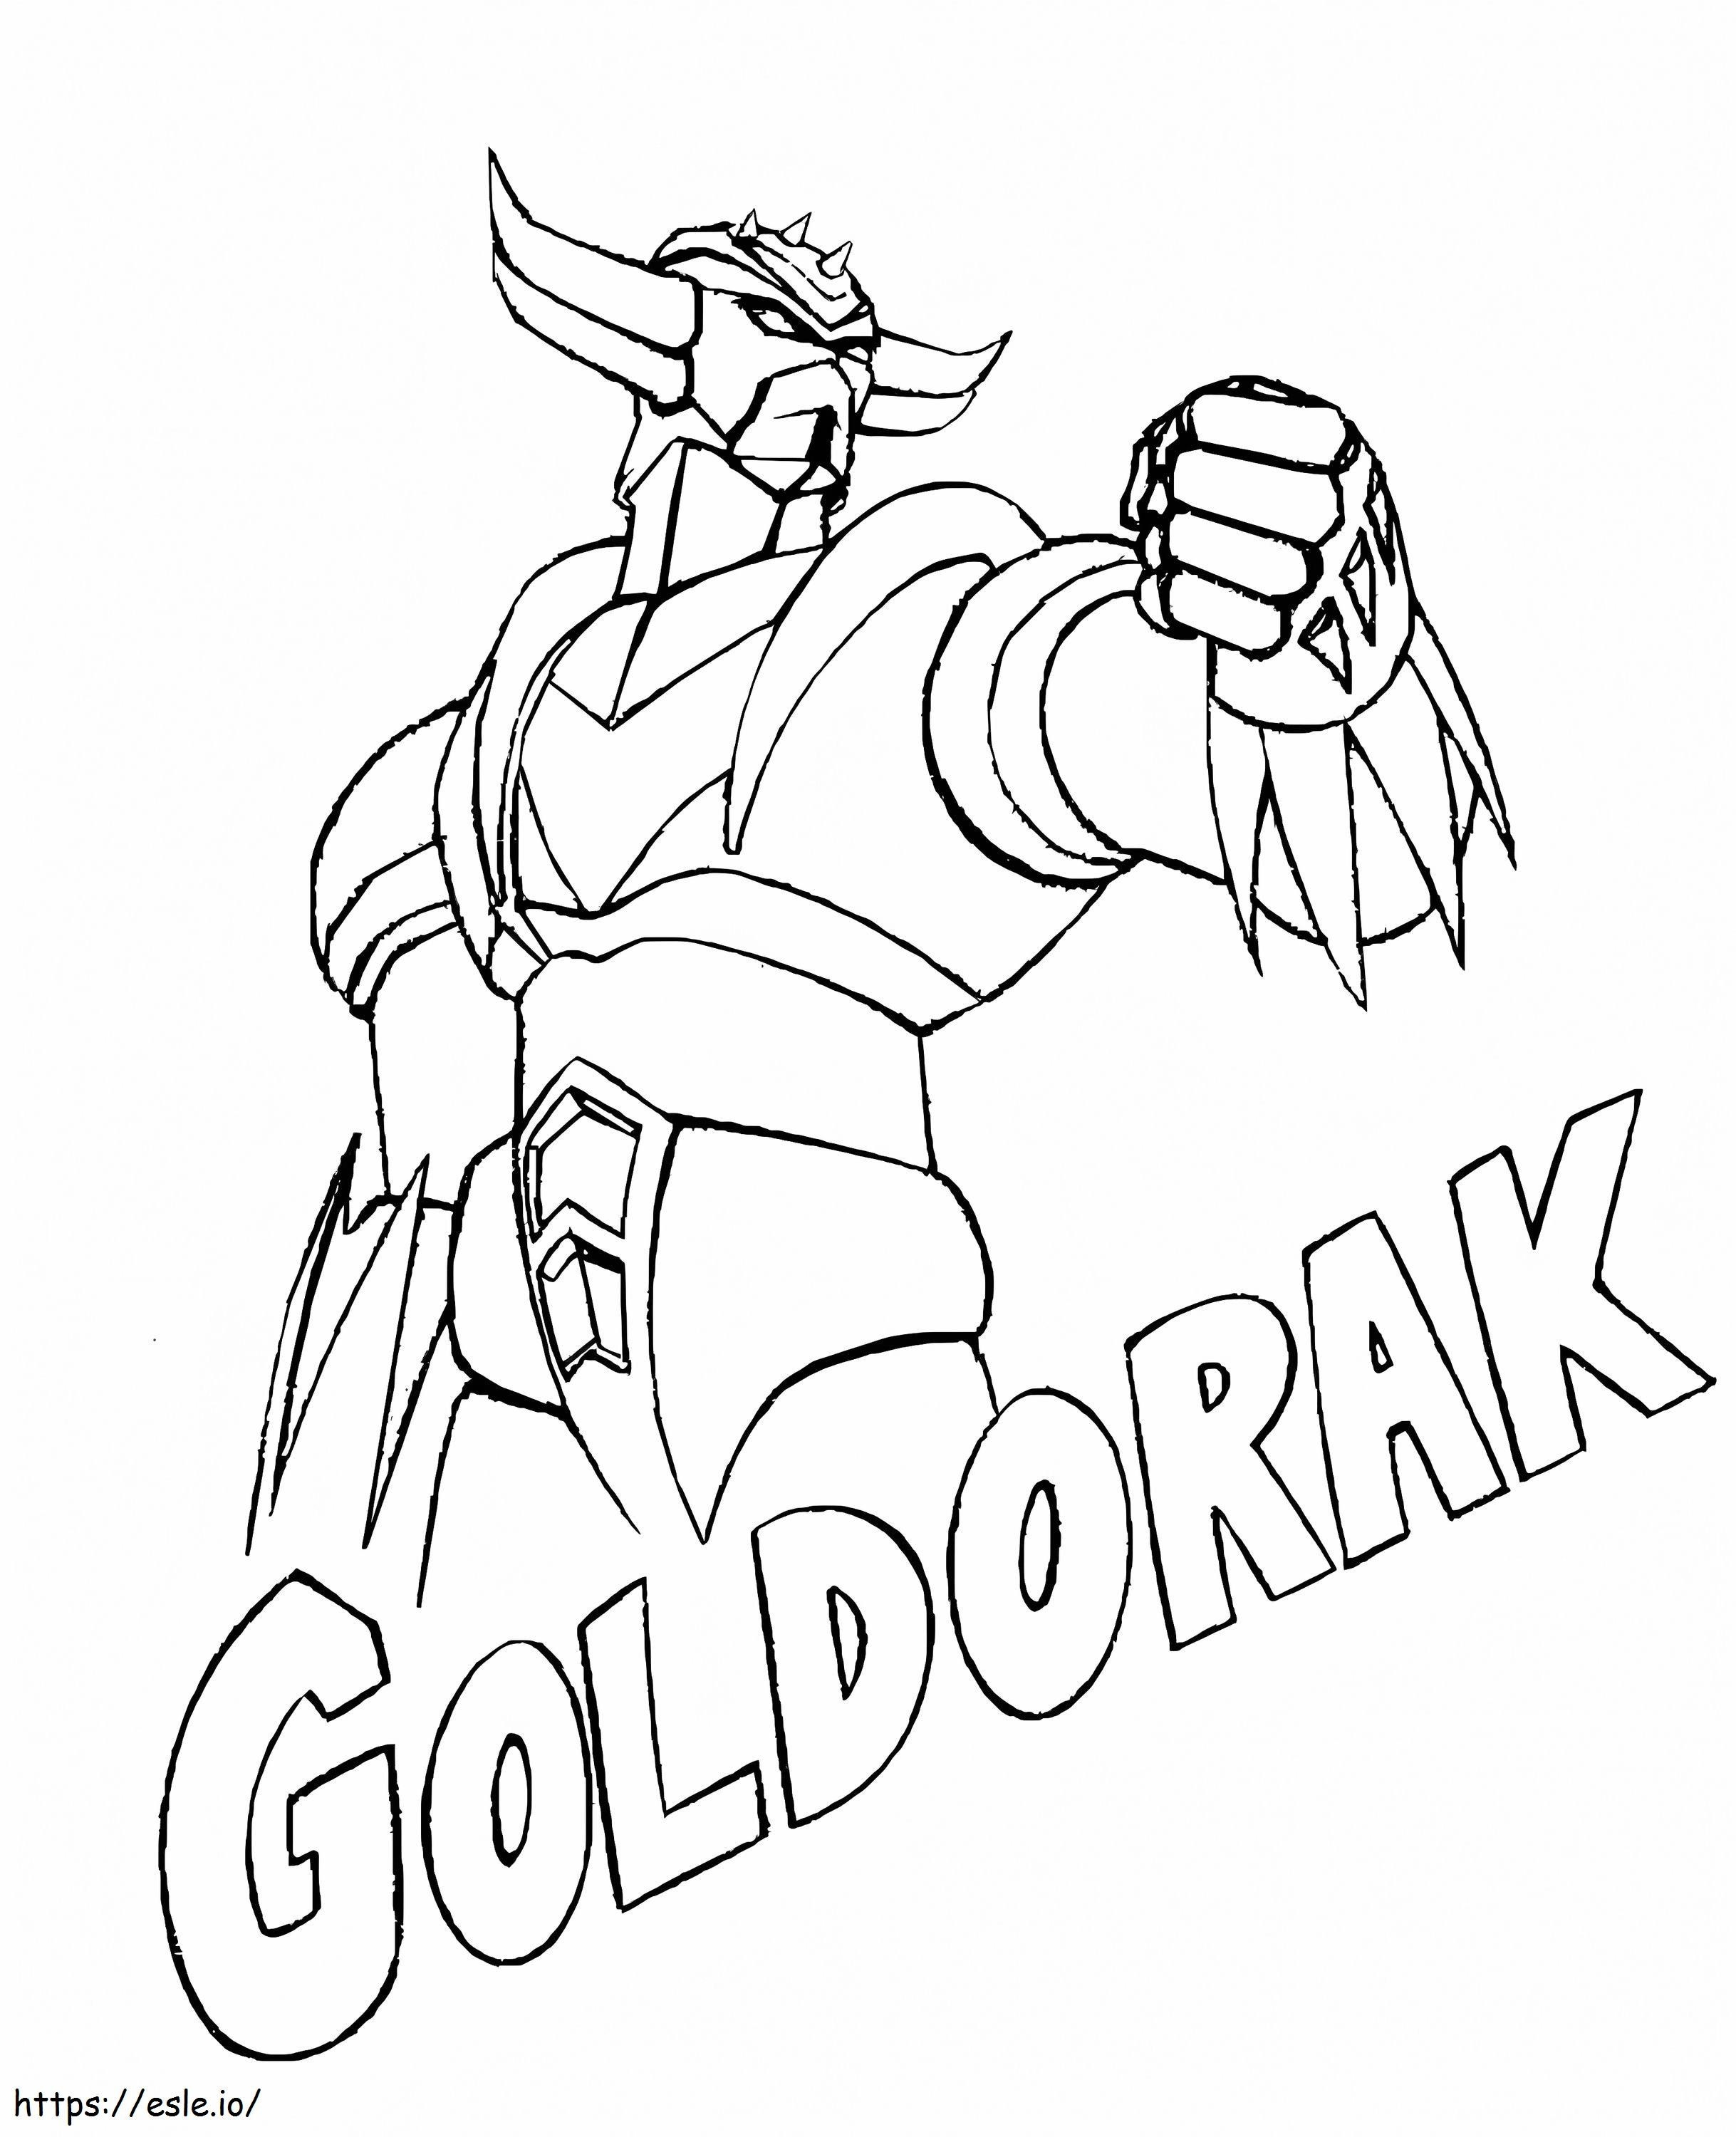 Awesome Goldorak coloring page